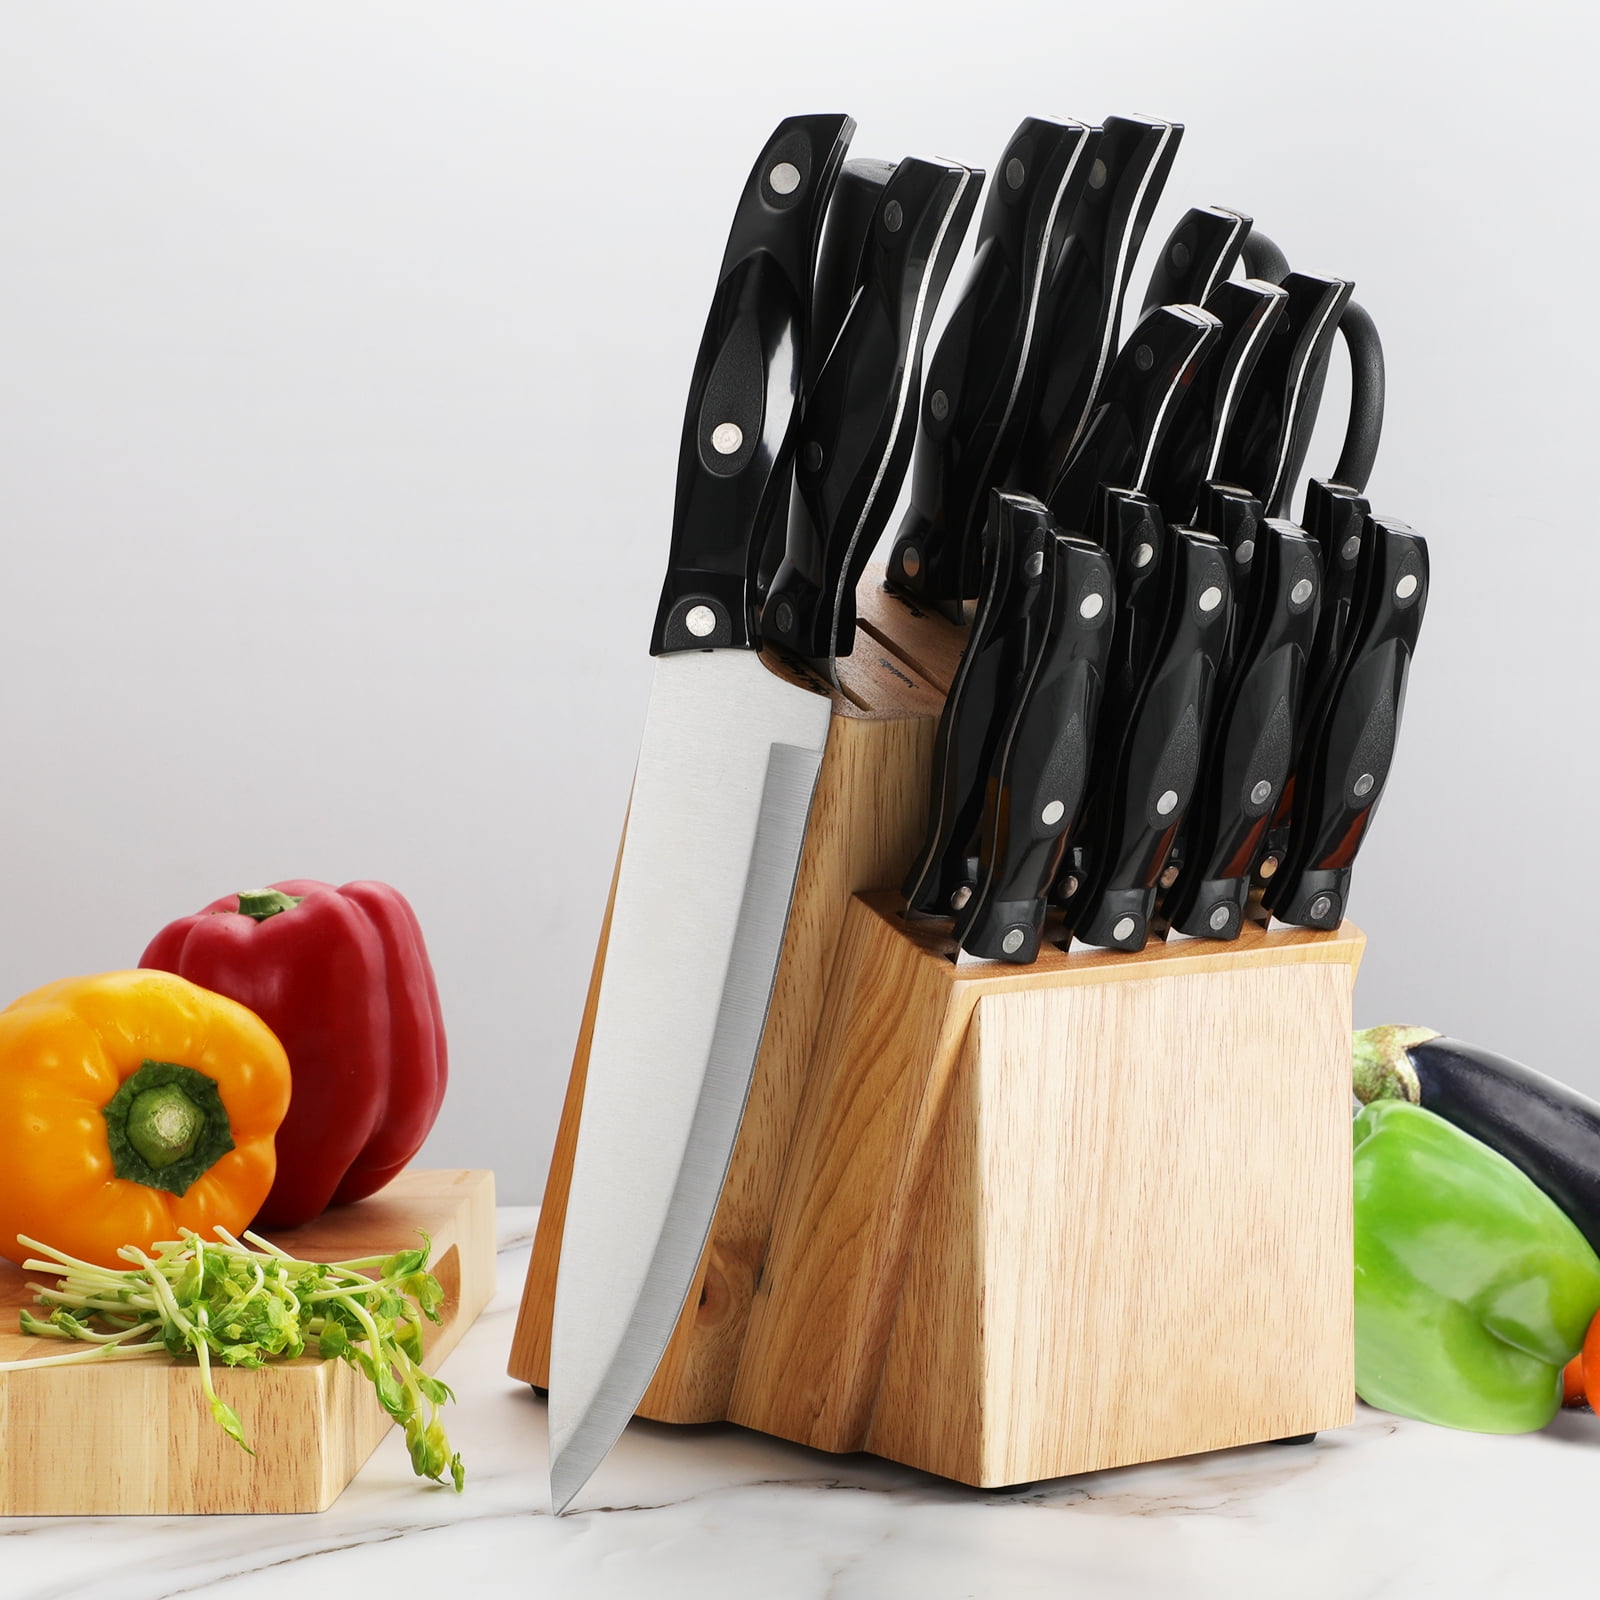 25pcs Set Kitchen Knife Set With Wooden Block Ultra Sharp High